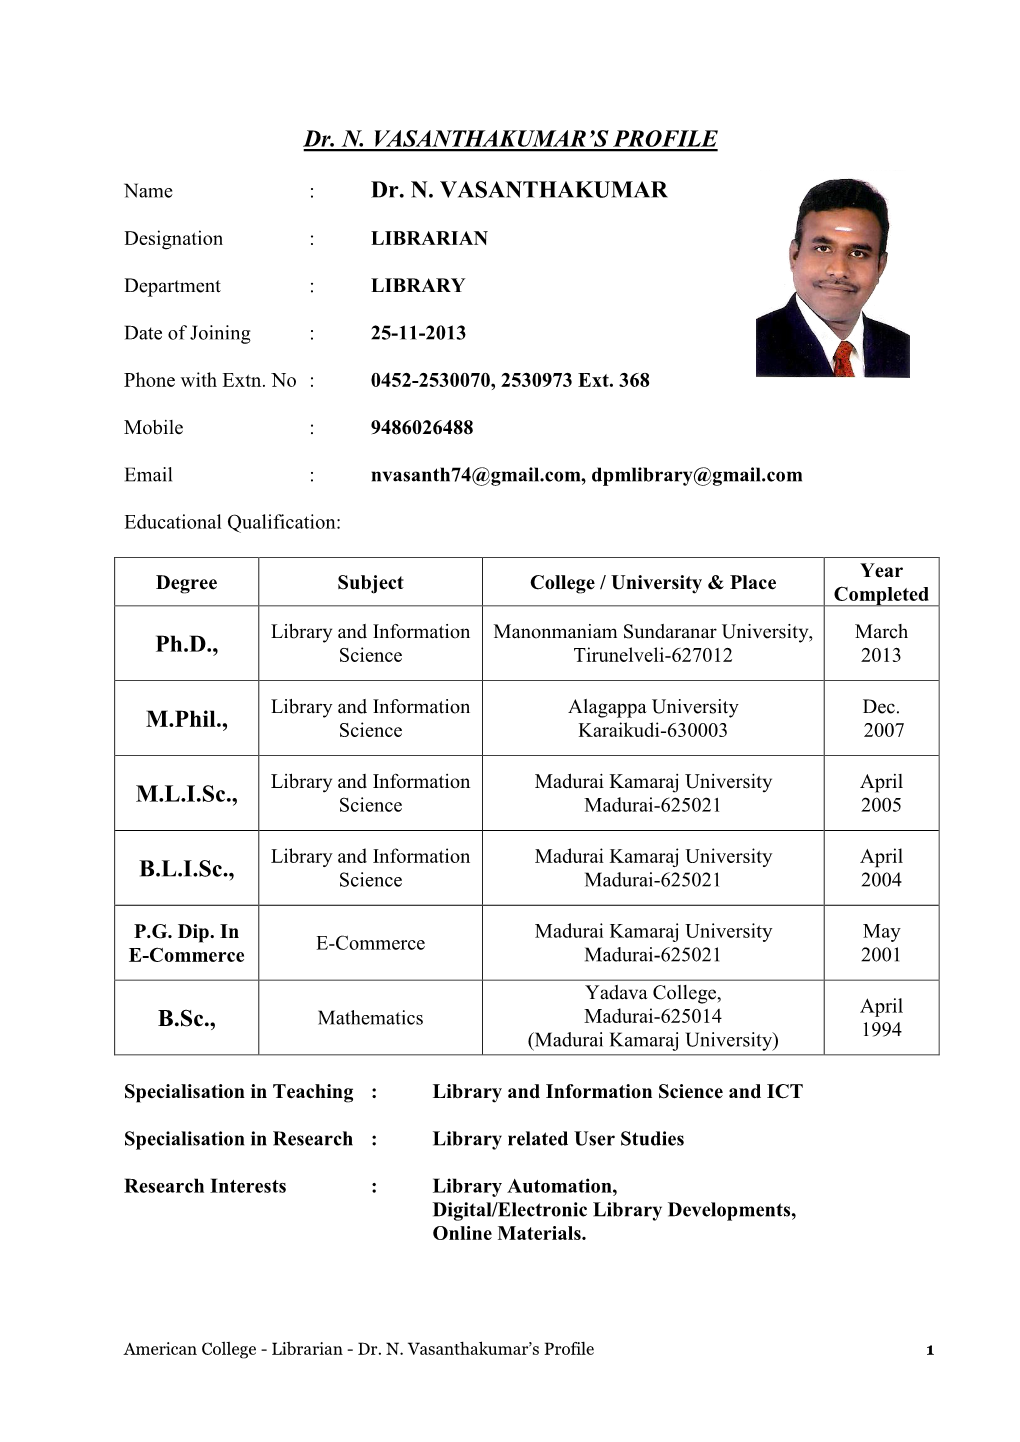 Dr. N. VASANTHAKUMAR's PROFILE